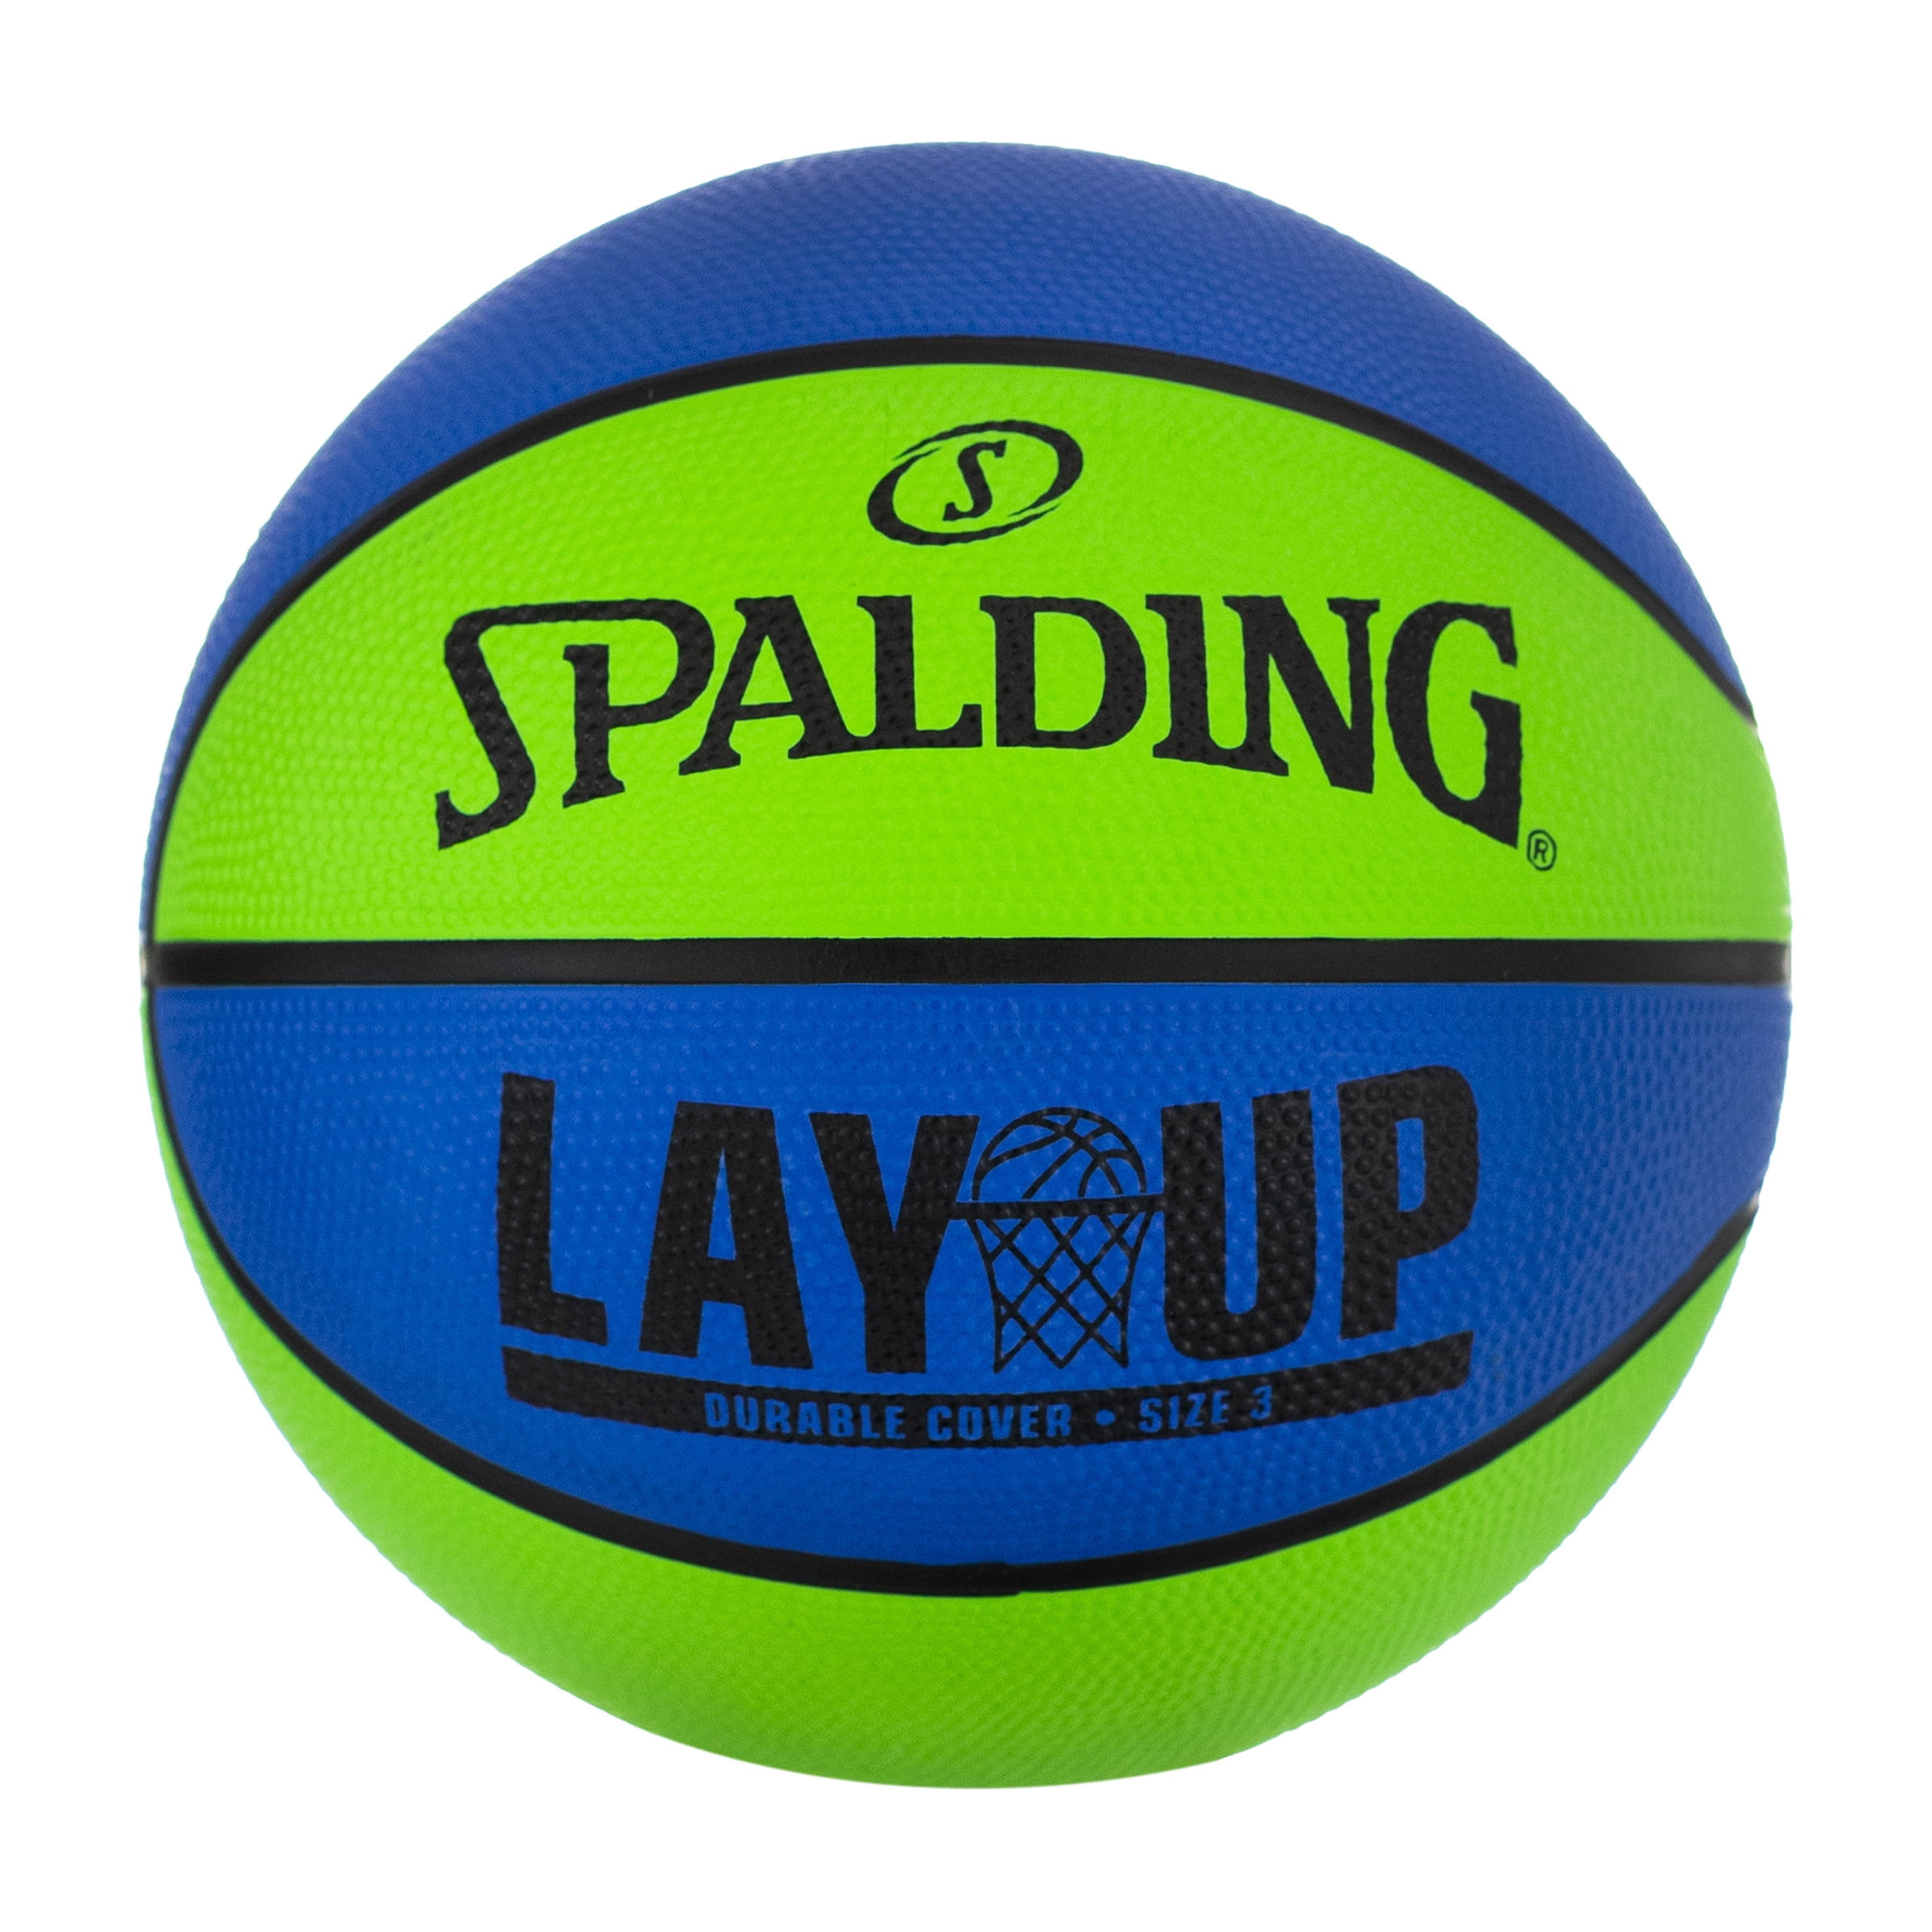 Spalding 4her Womens basketball Jersey for Women Blue 